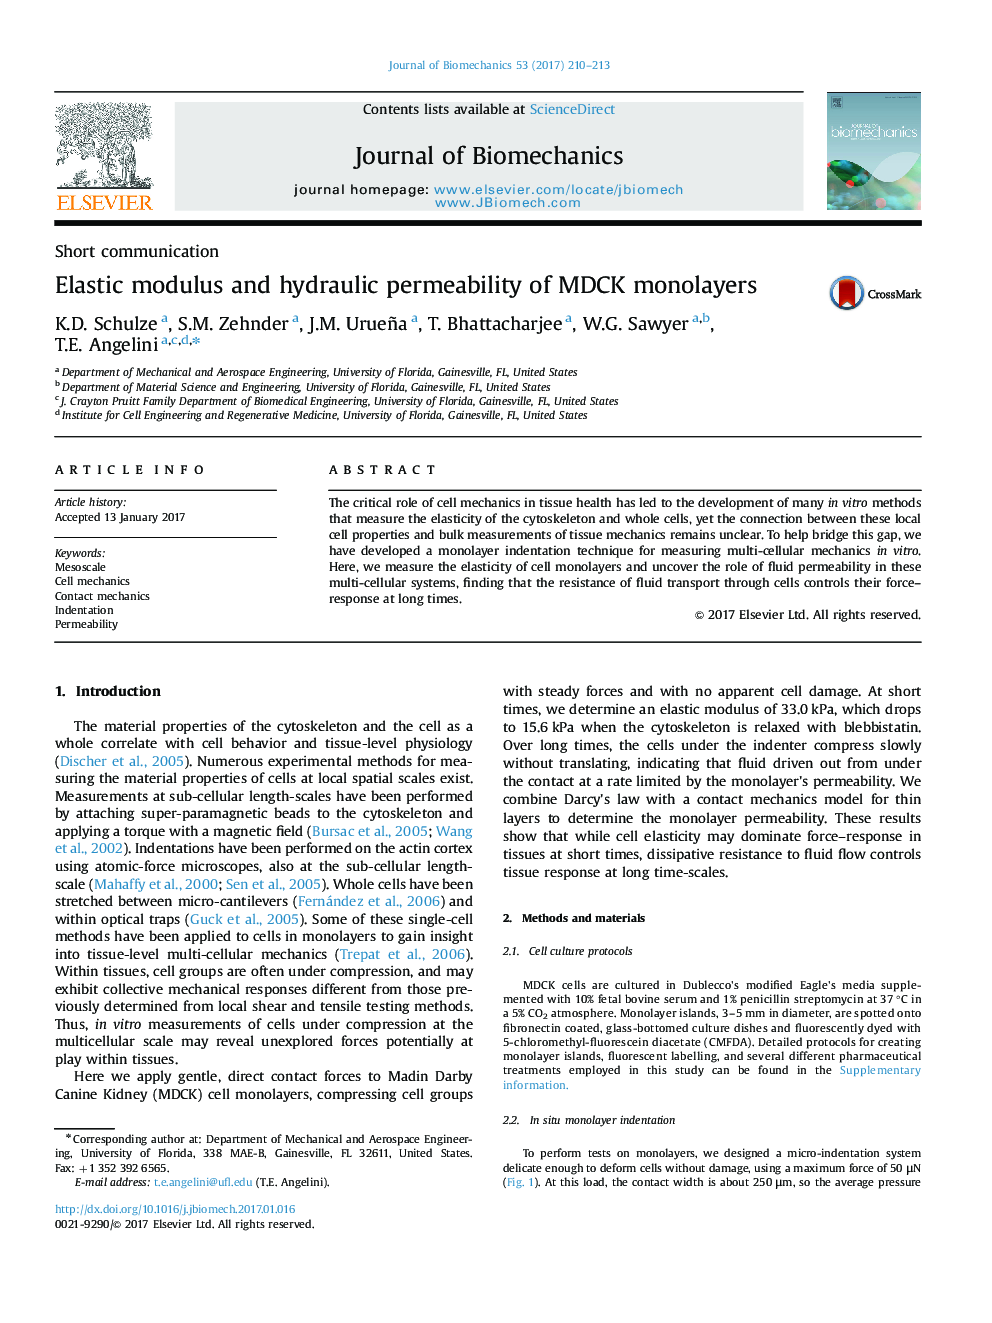 Elastic modulus and hydraulic permeability of MDCK monolayers